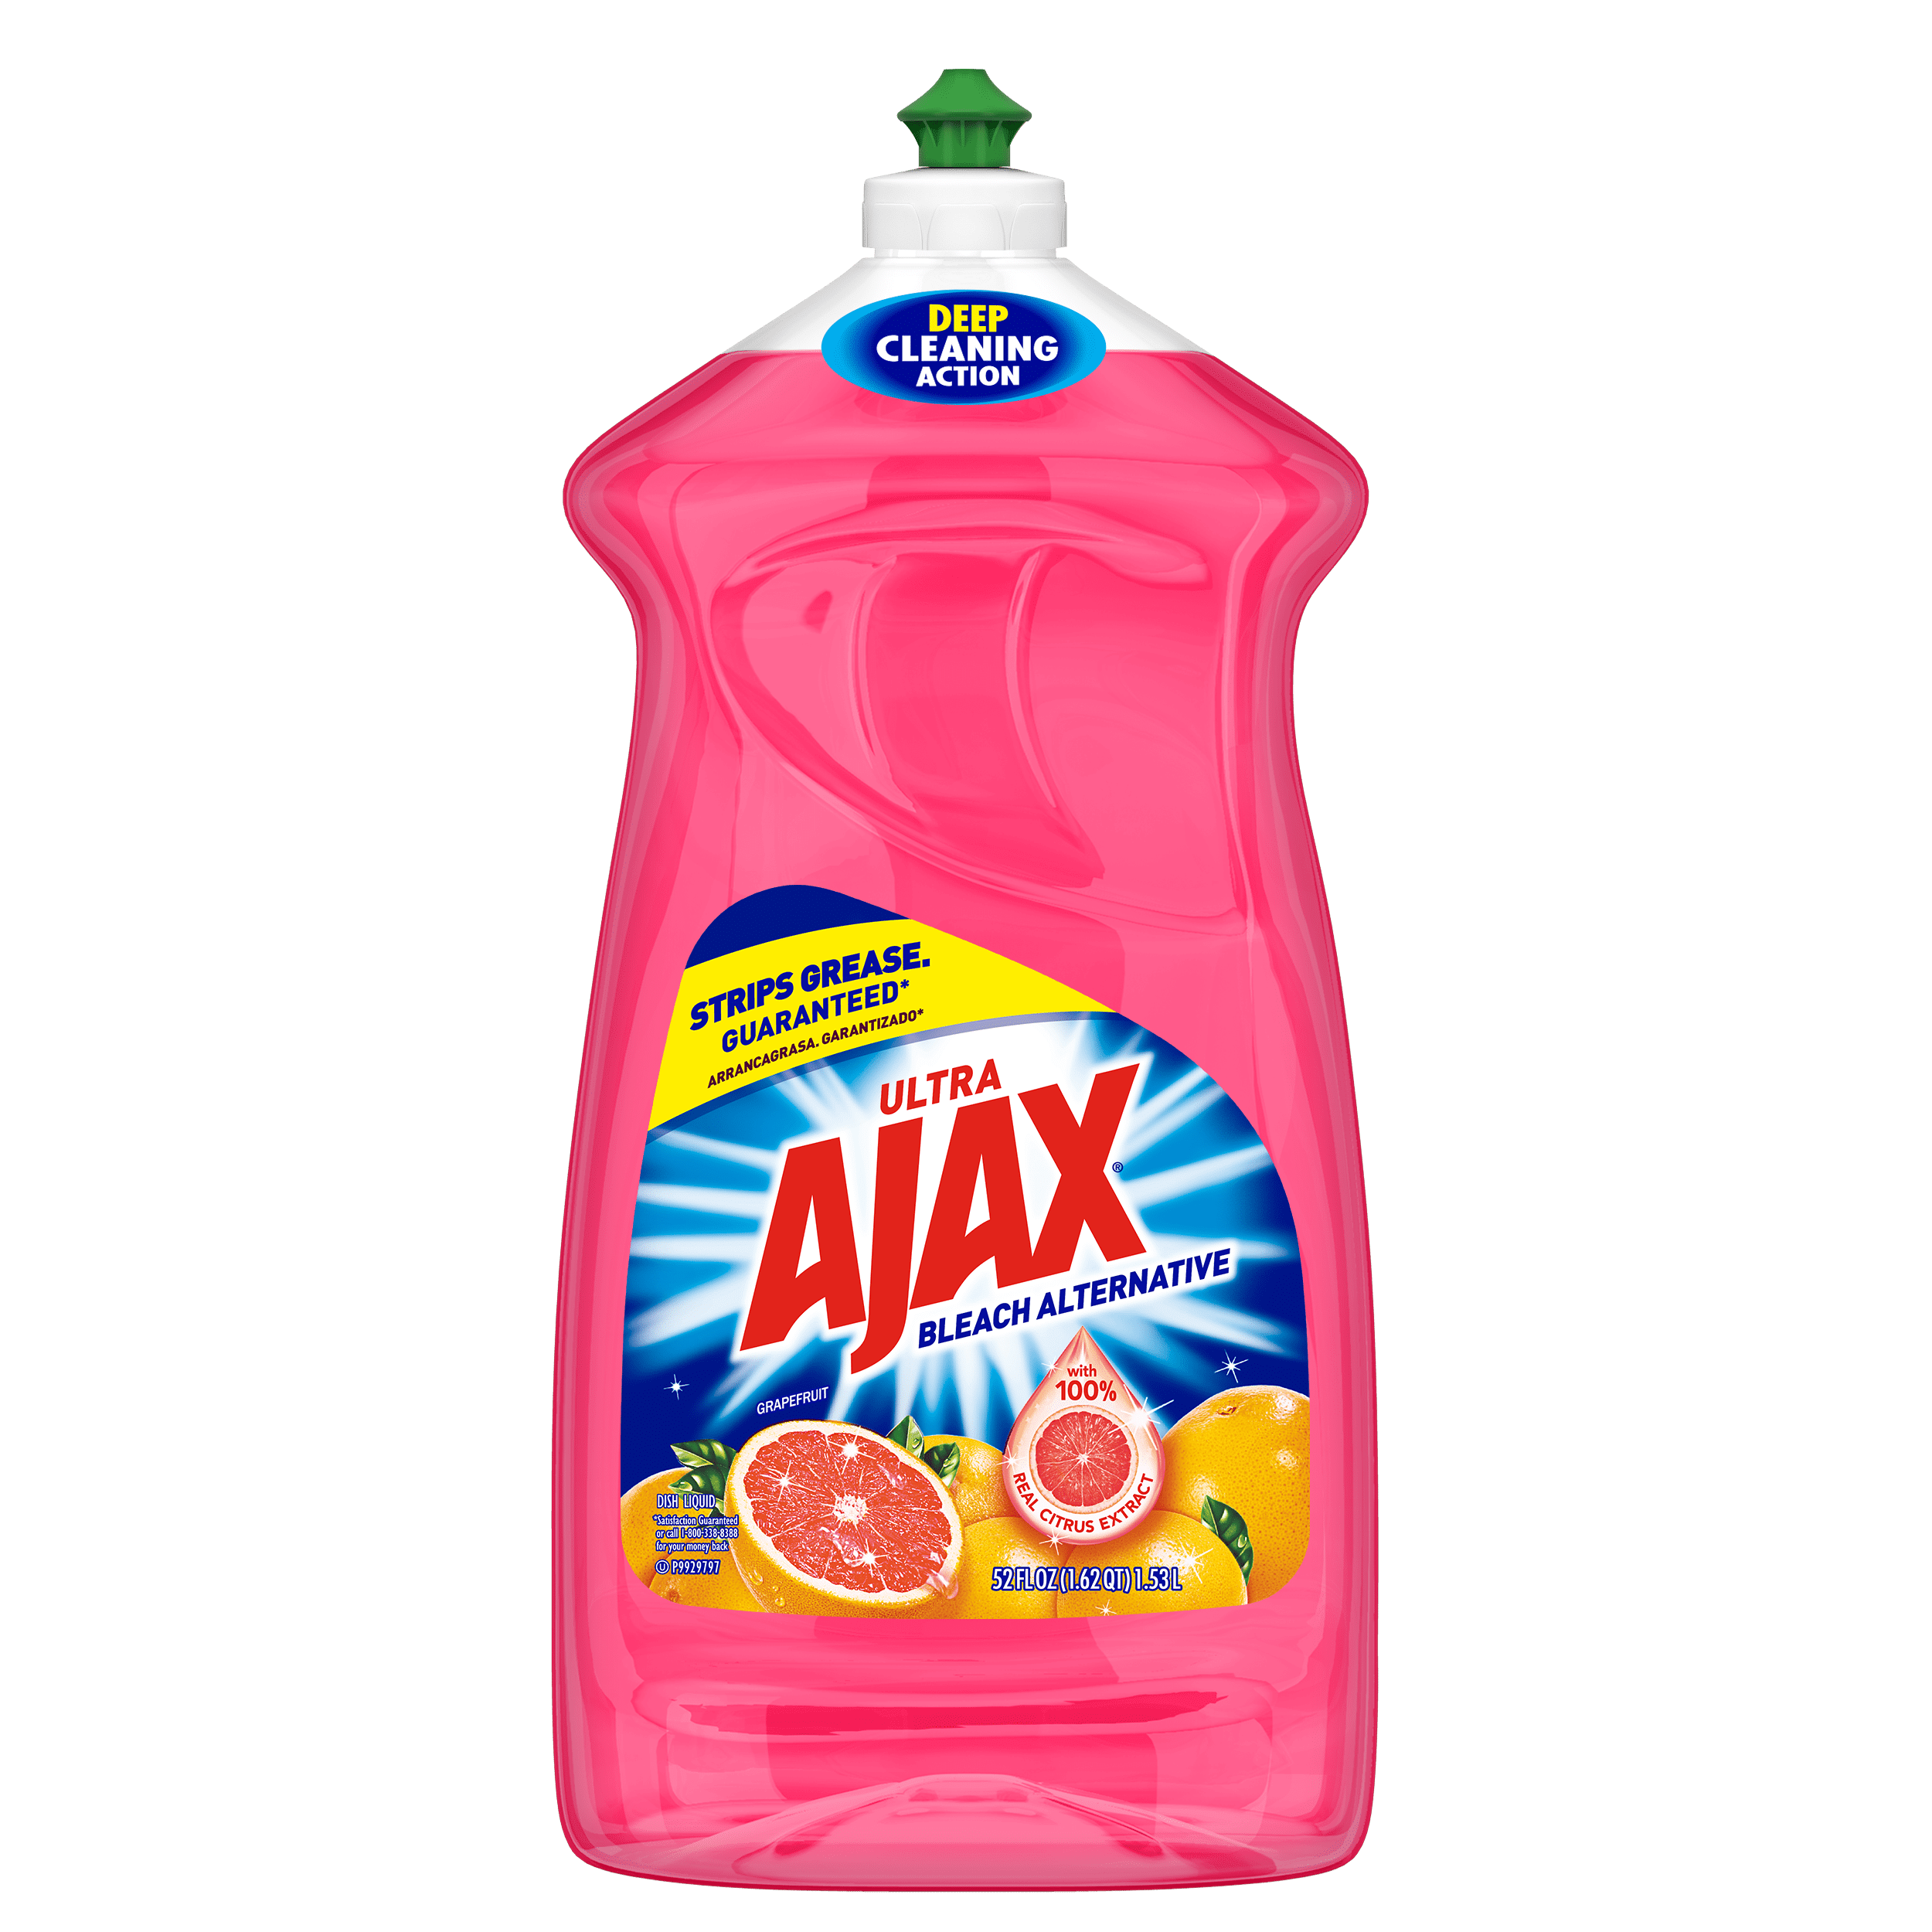 Ajax Ultra Bleach Alternative Dishwashing Liquid Dish Soap, Grapefruit  Scent - 52 Fluid Ounce